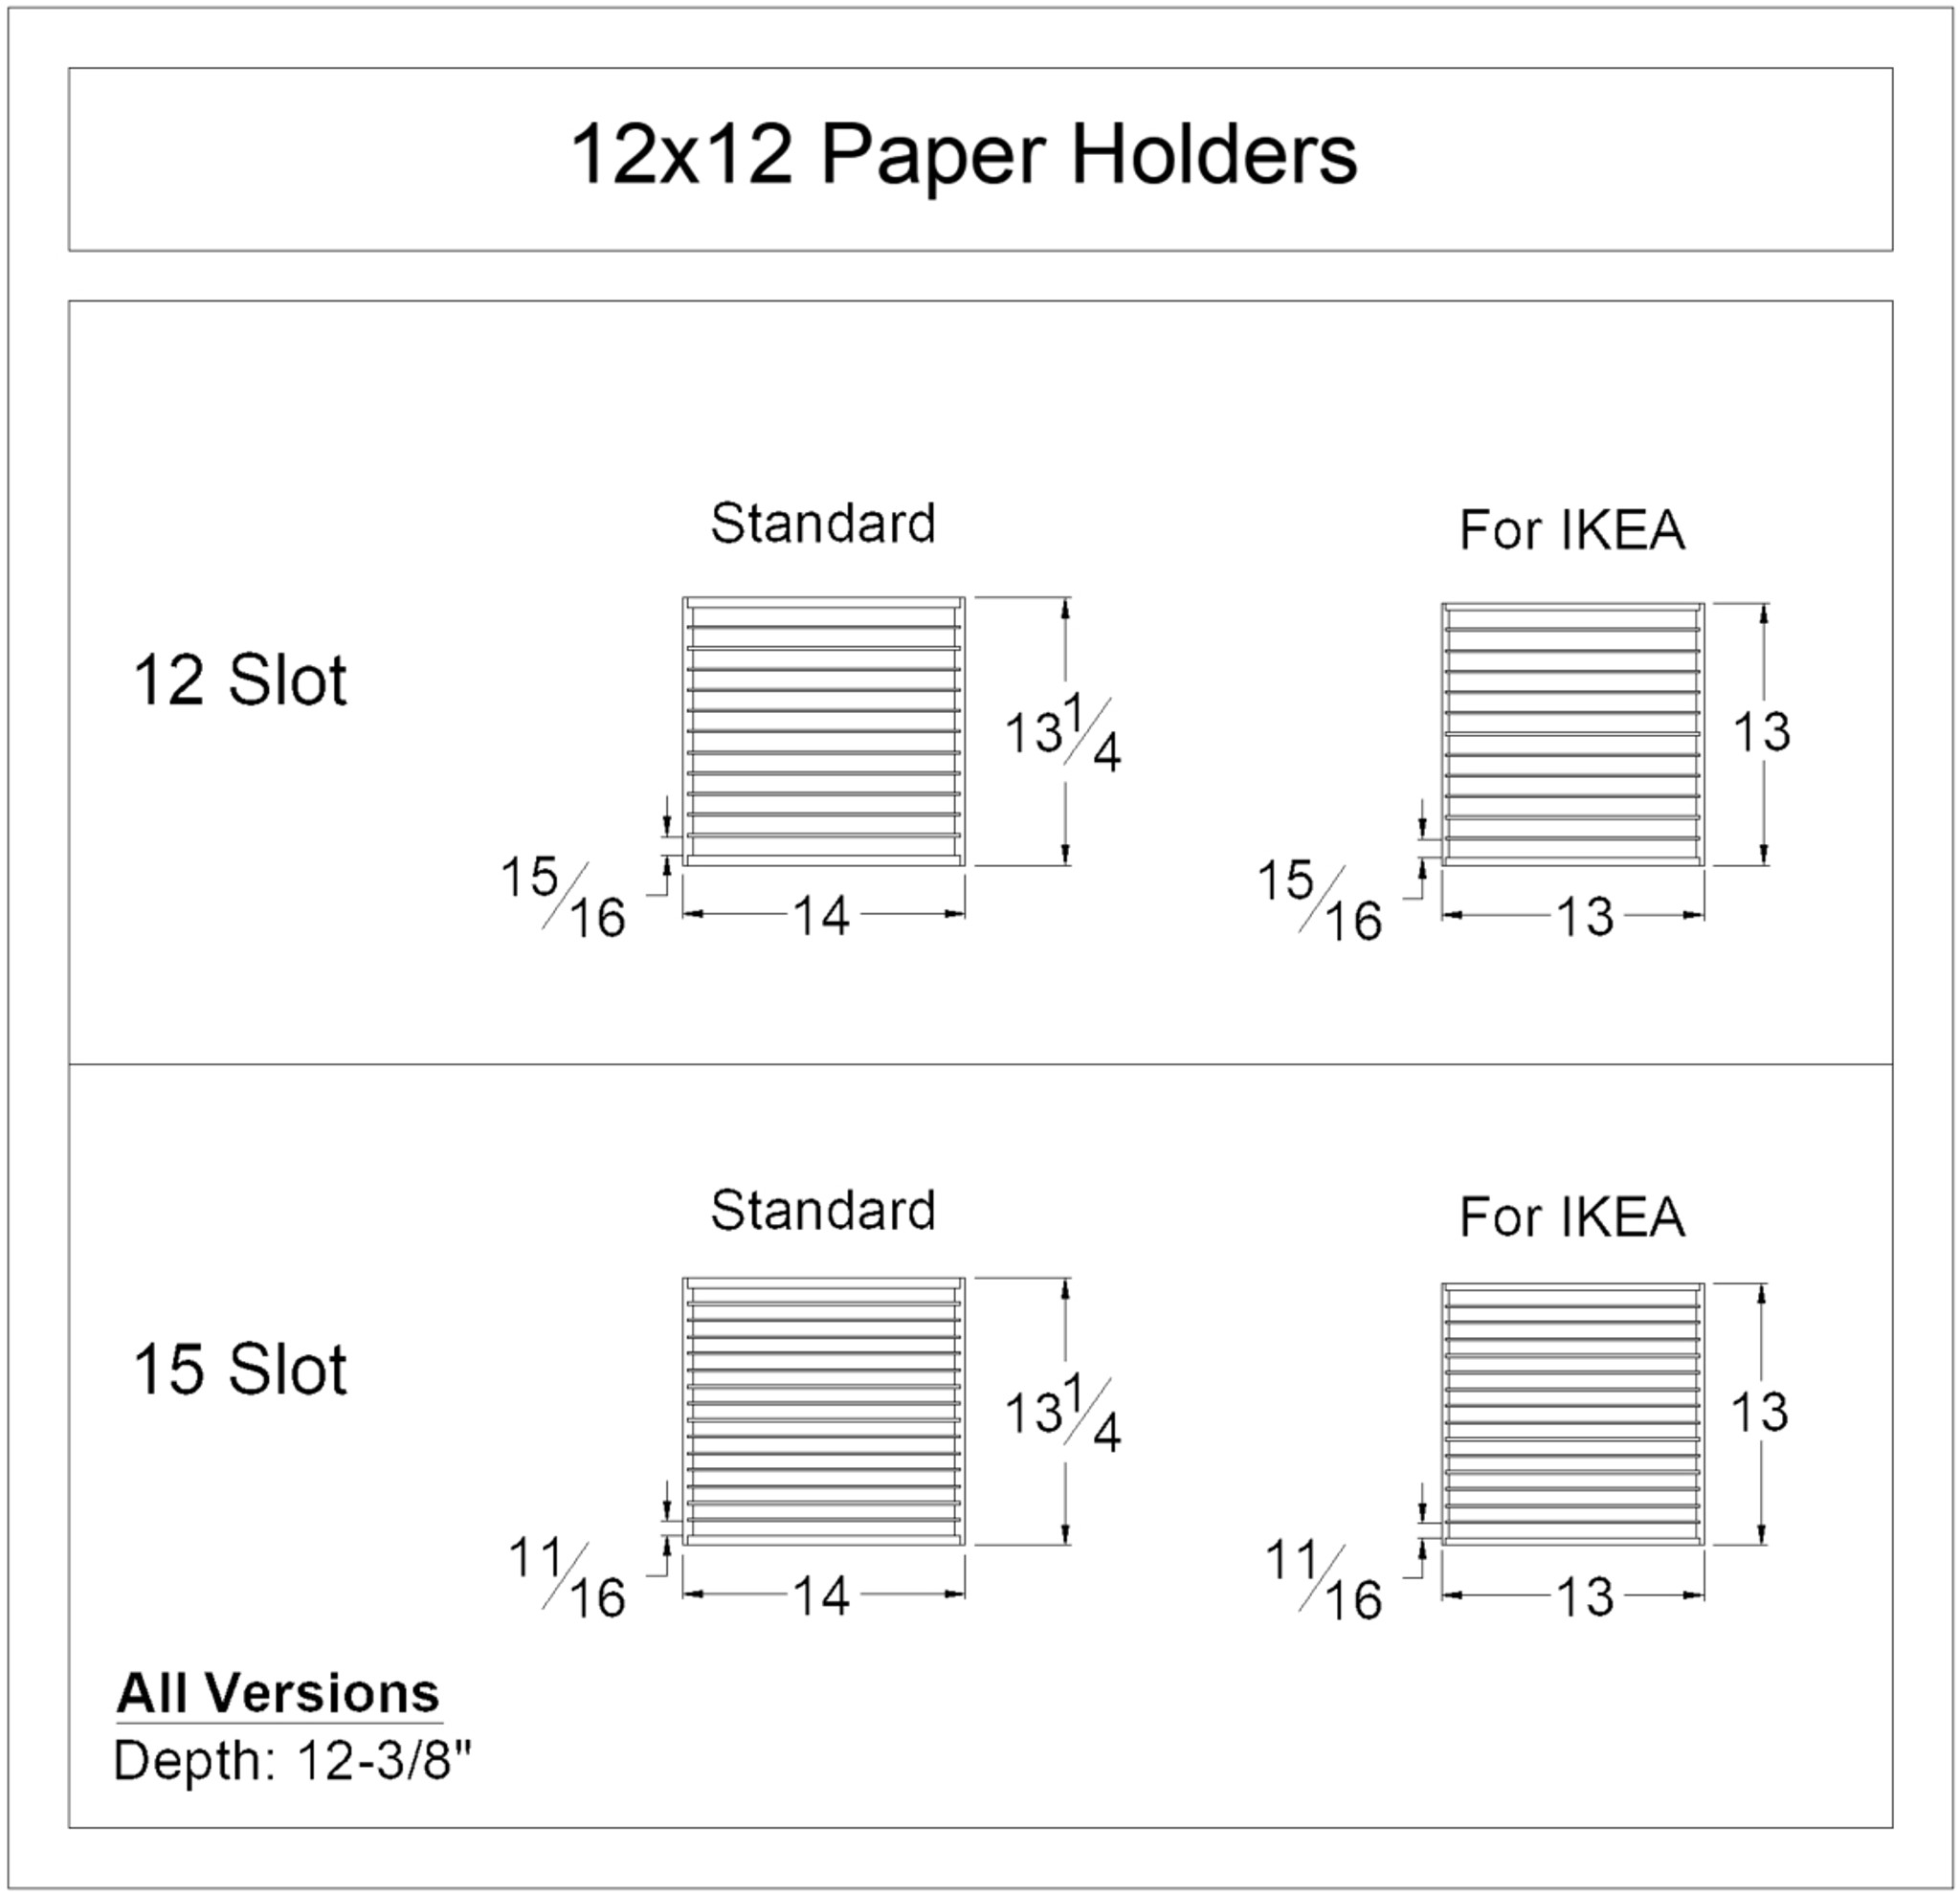 12x12 Paper Holders